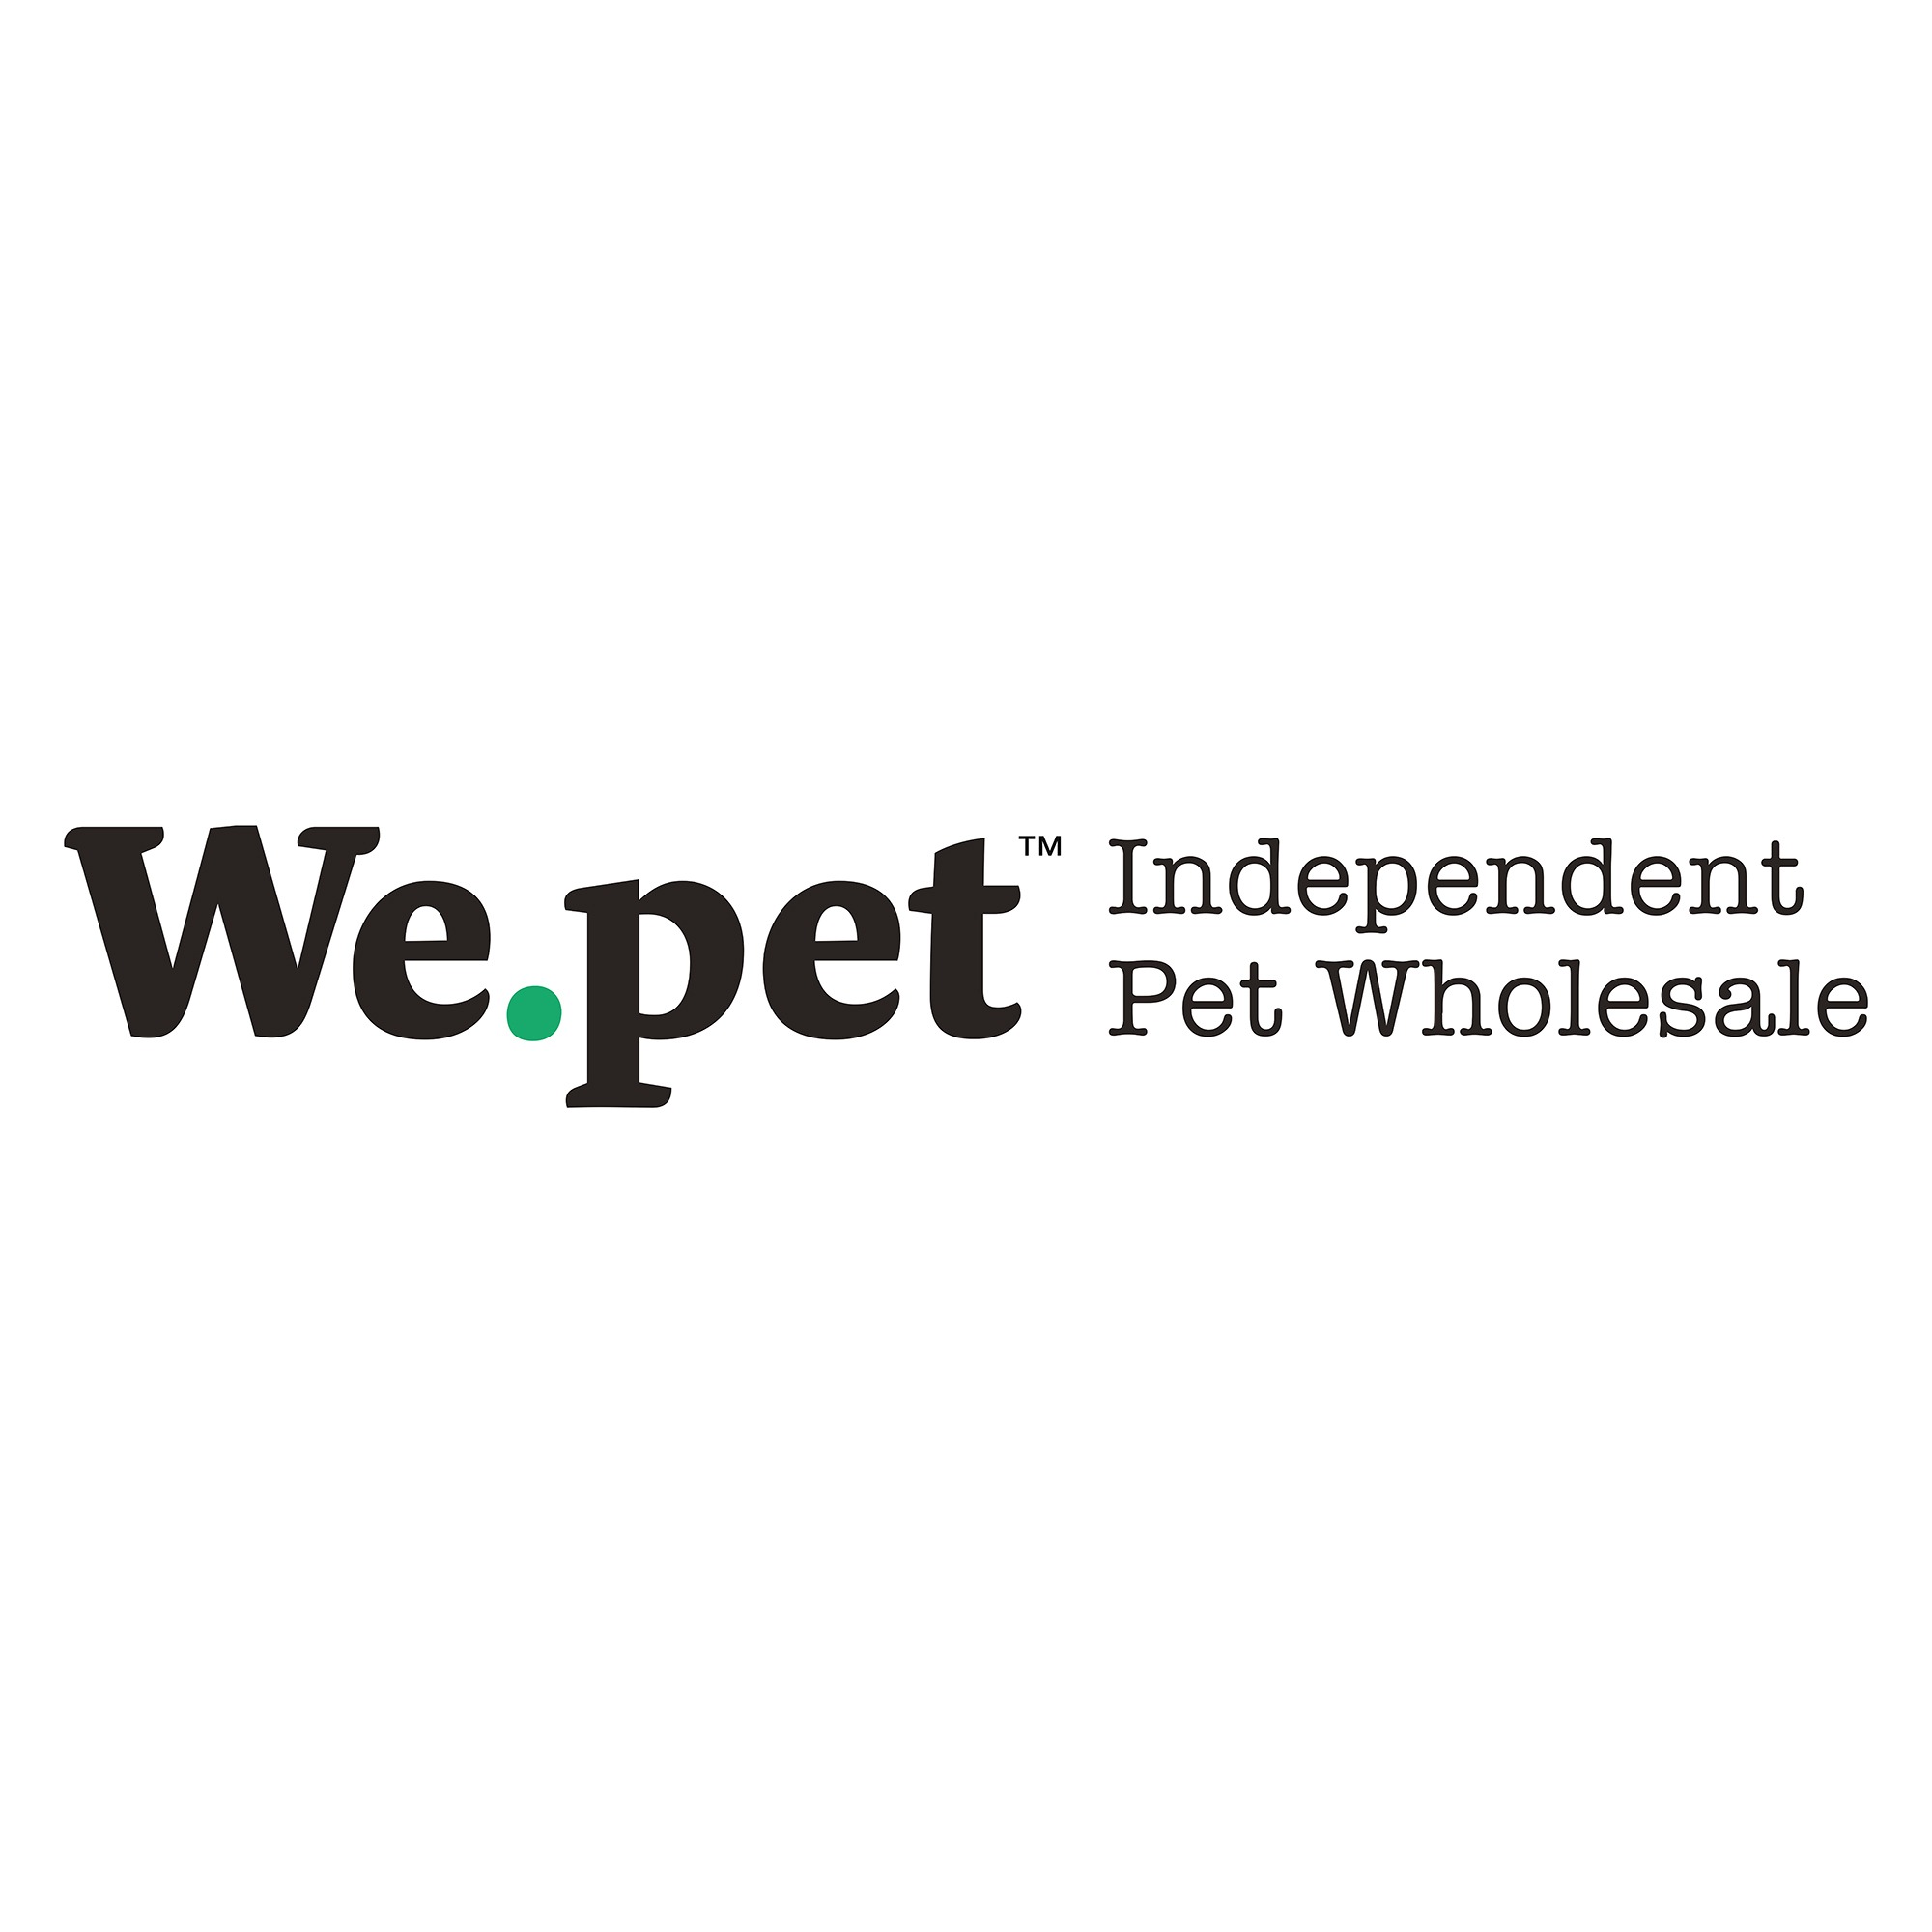 We.pet Independent Pet Wholesale Logo